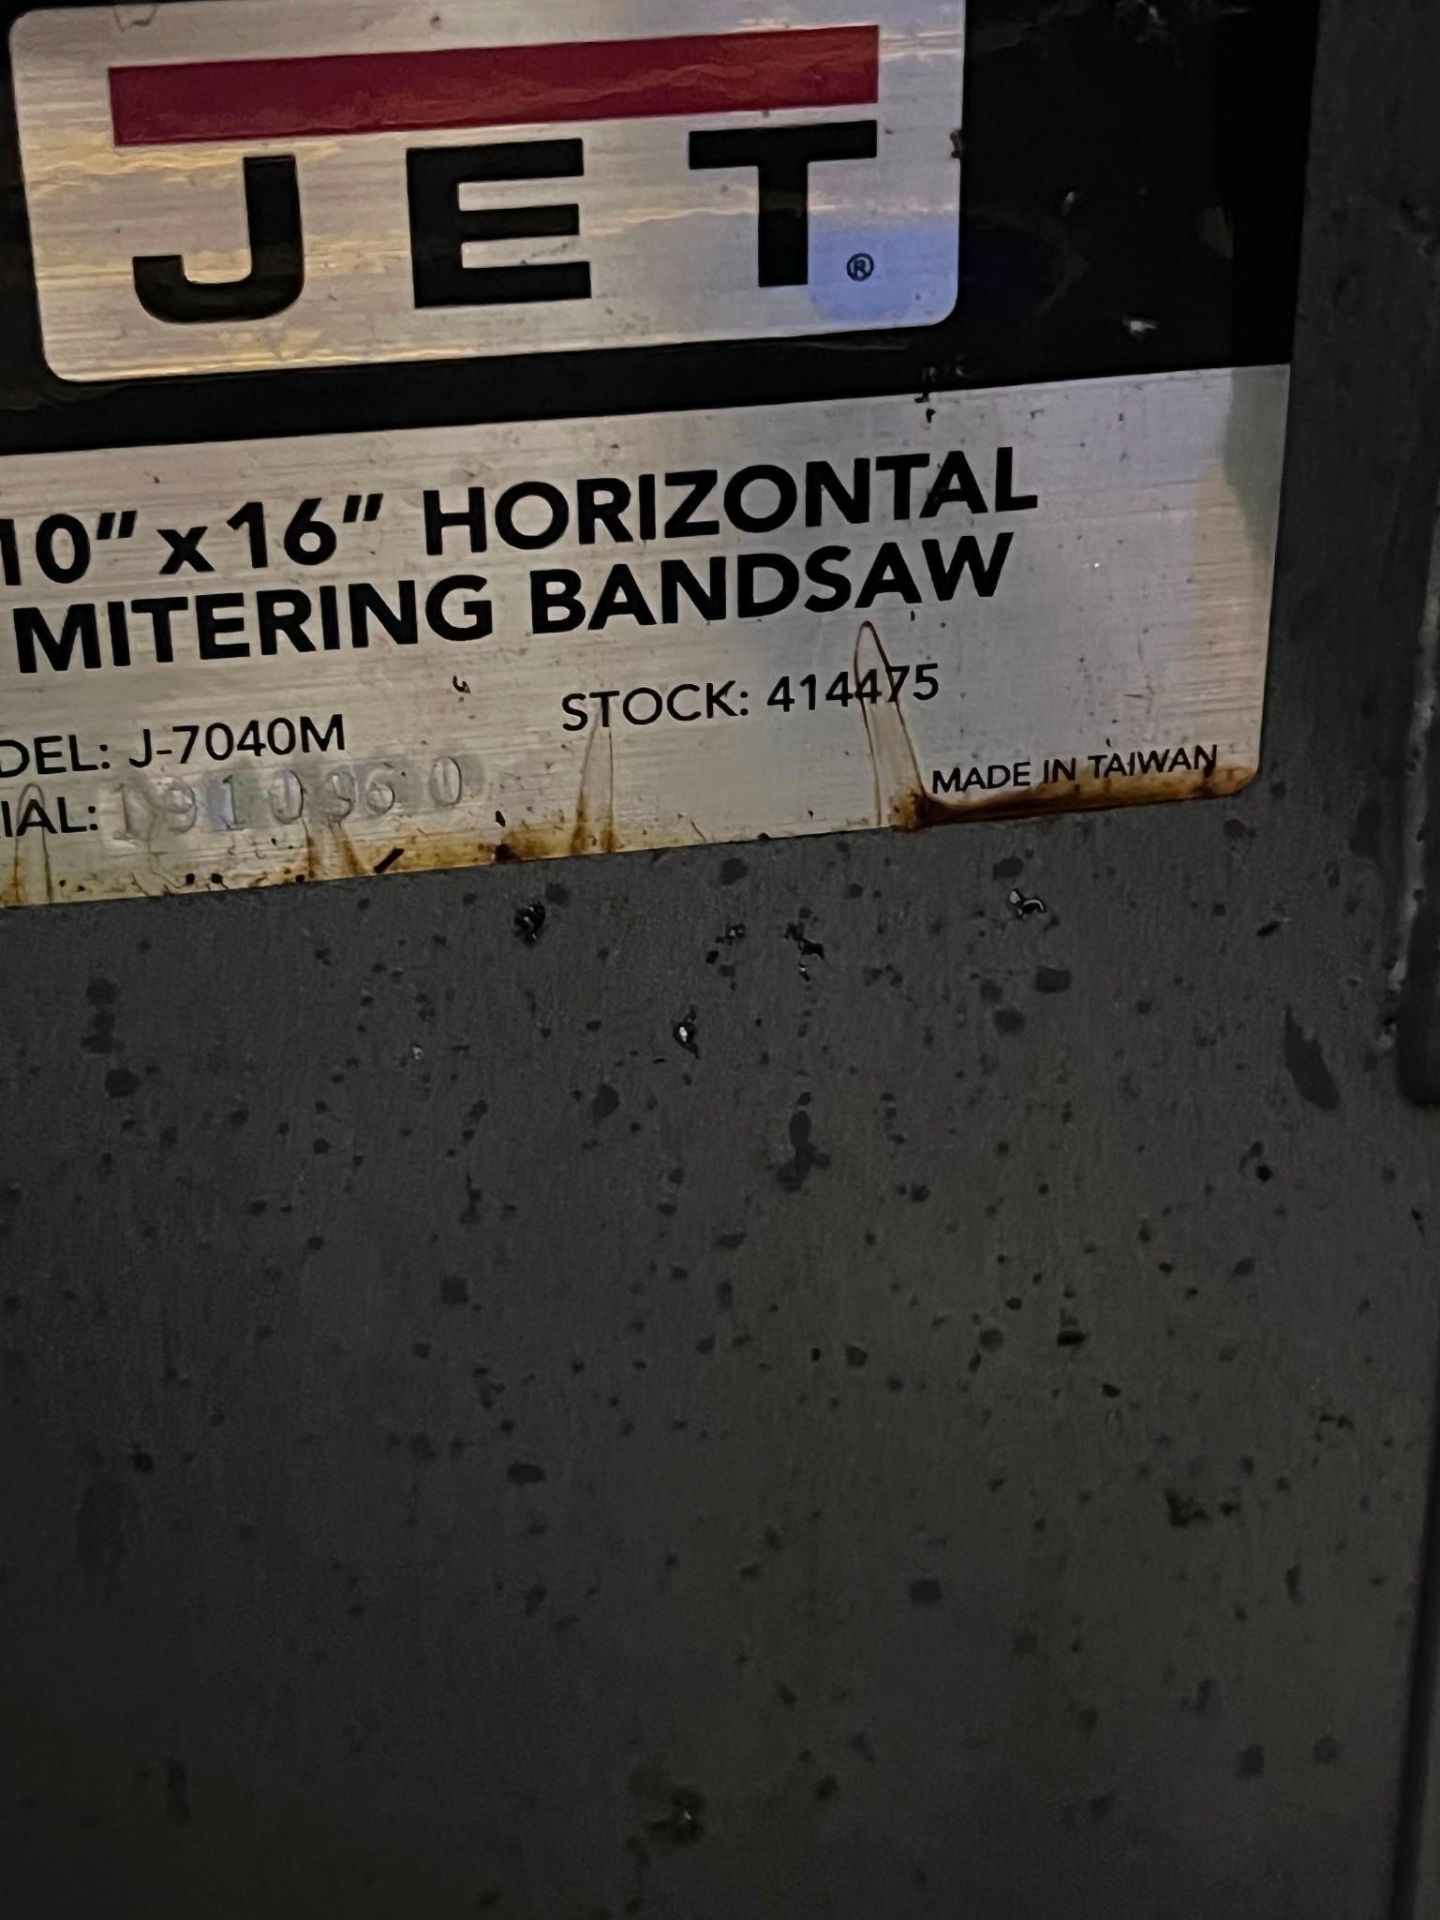 2019 Jet Model J-7040M Horizontal Metal Cutting Bandsaw Stock Number: 414475 Serial No: 1910960 10" - Image 16 of 16